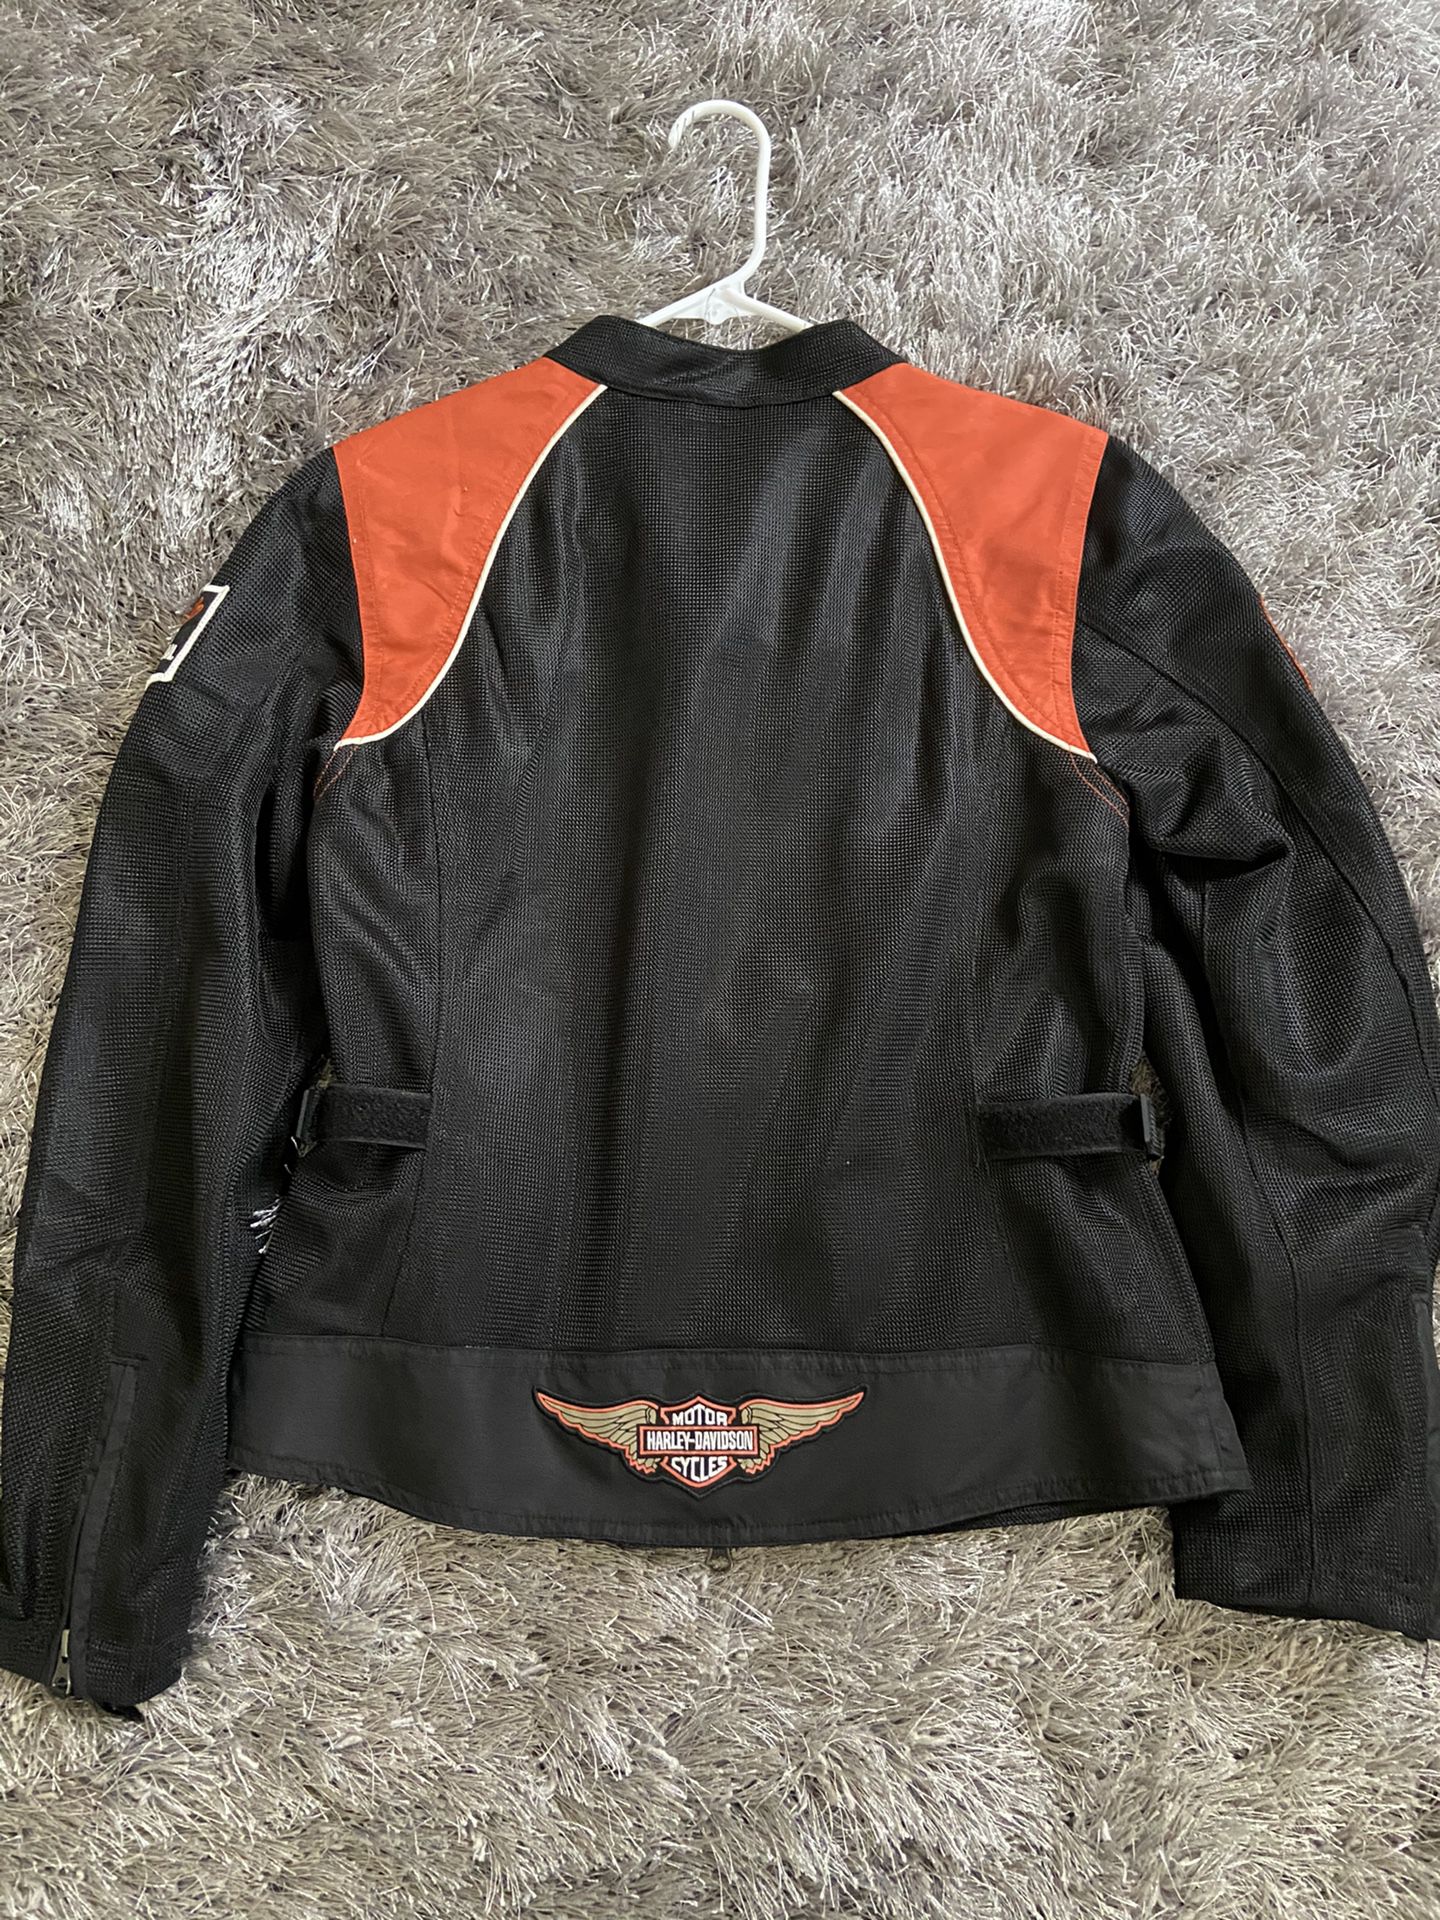 Harley Davidson 2 in 1 riding jacket